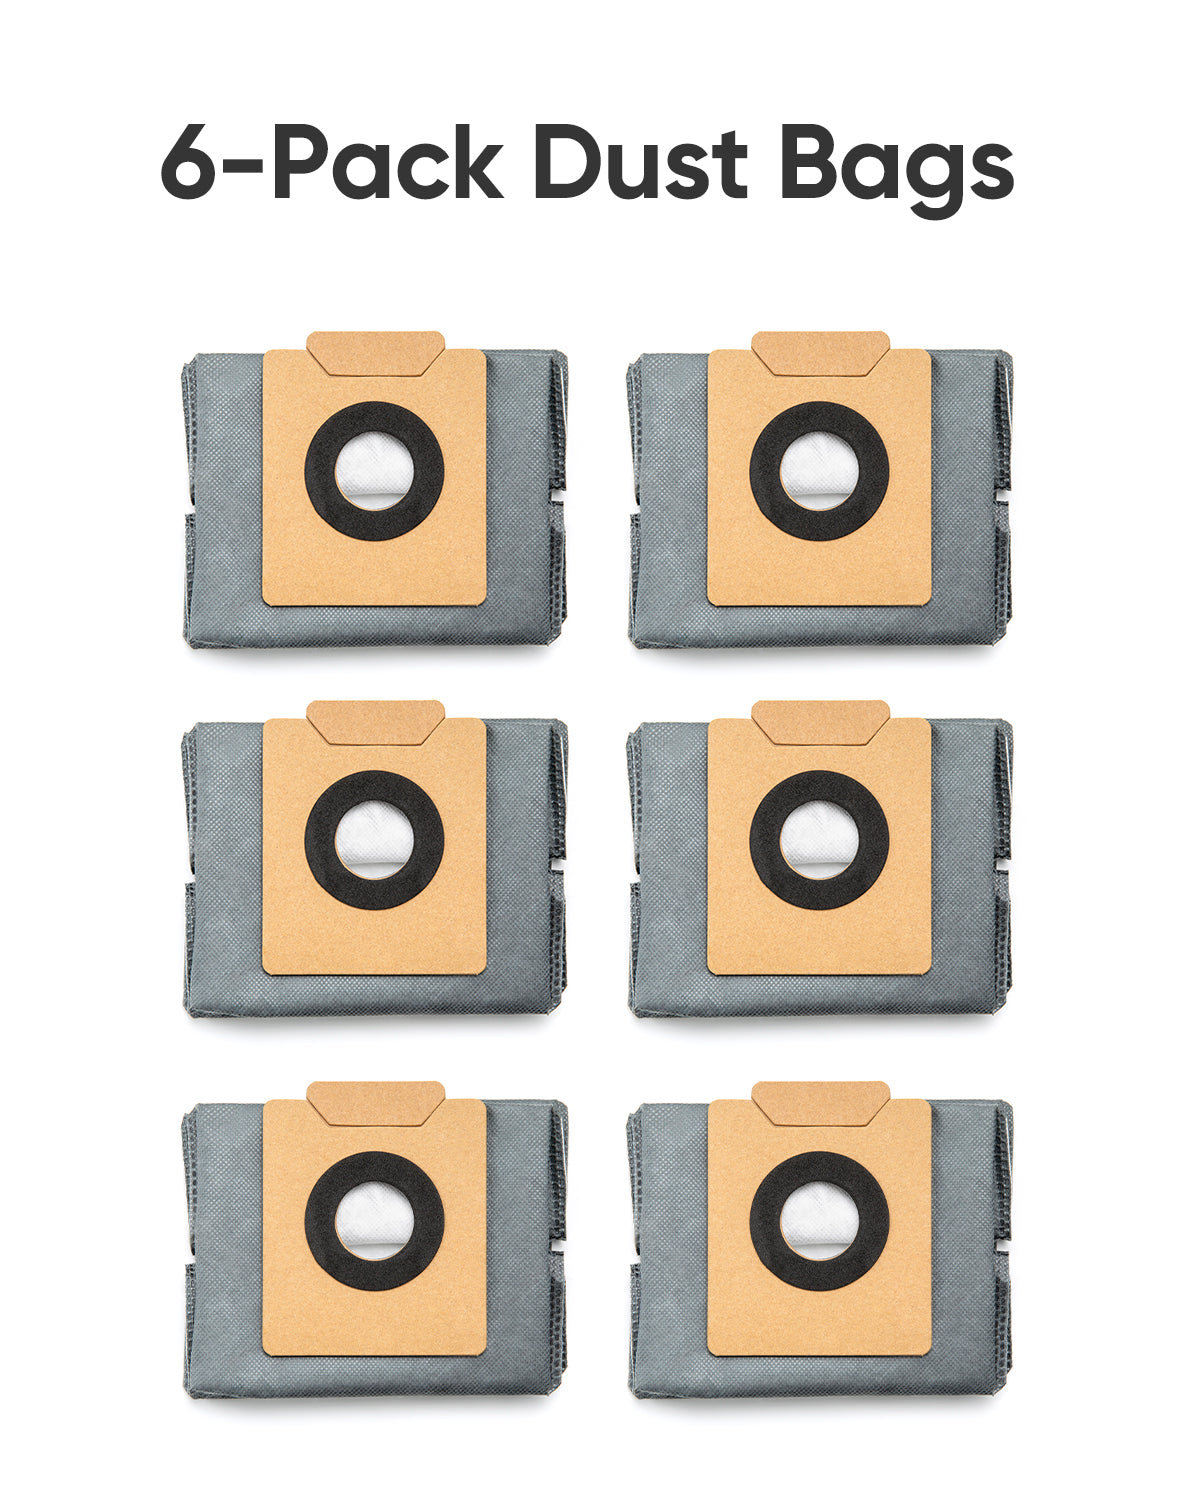  6-Pack Dust Bags